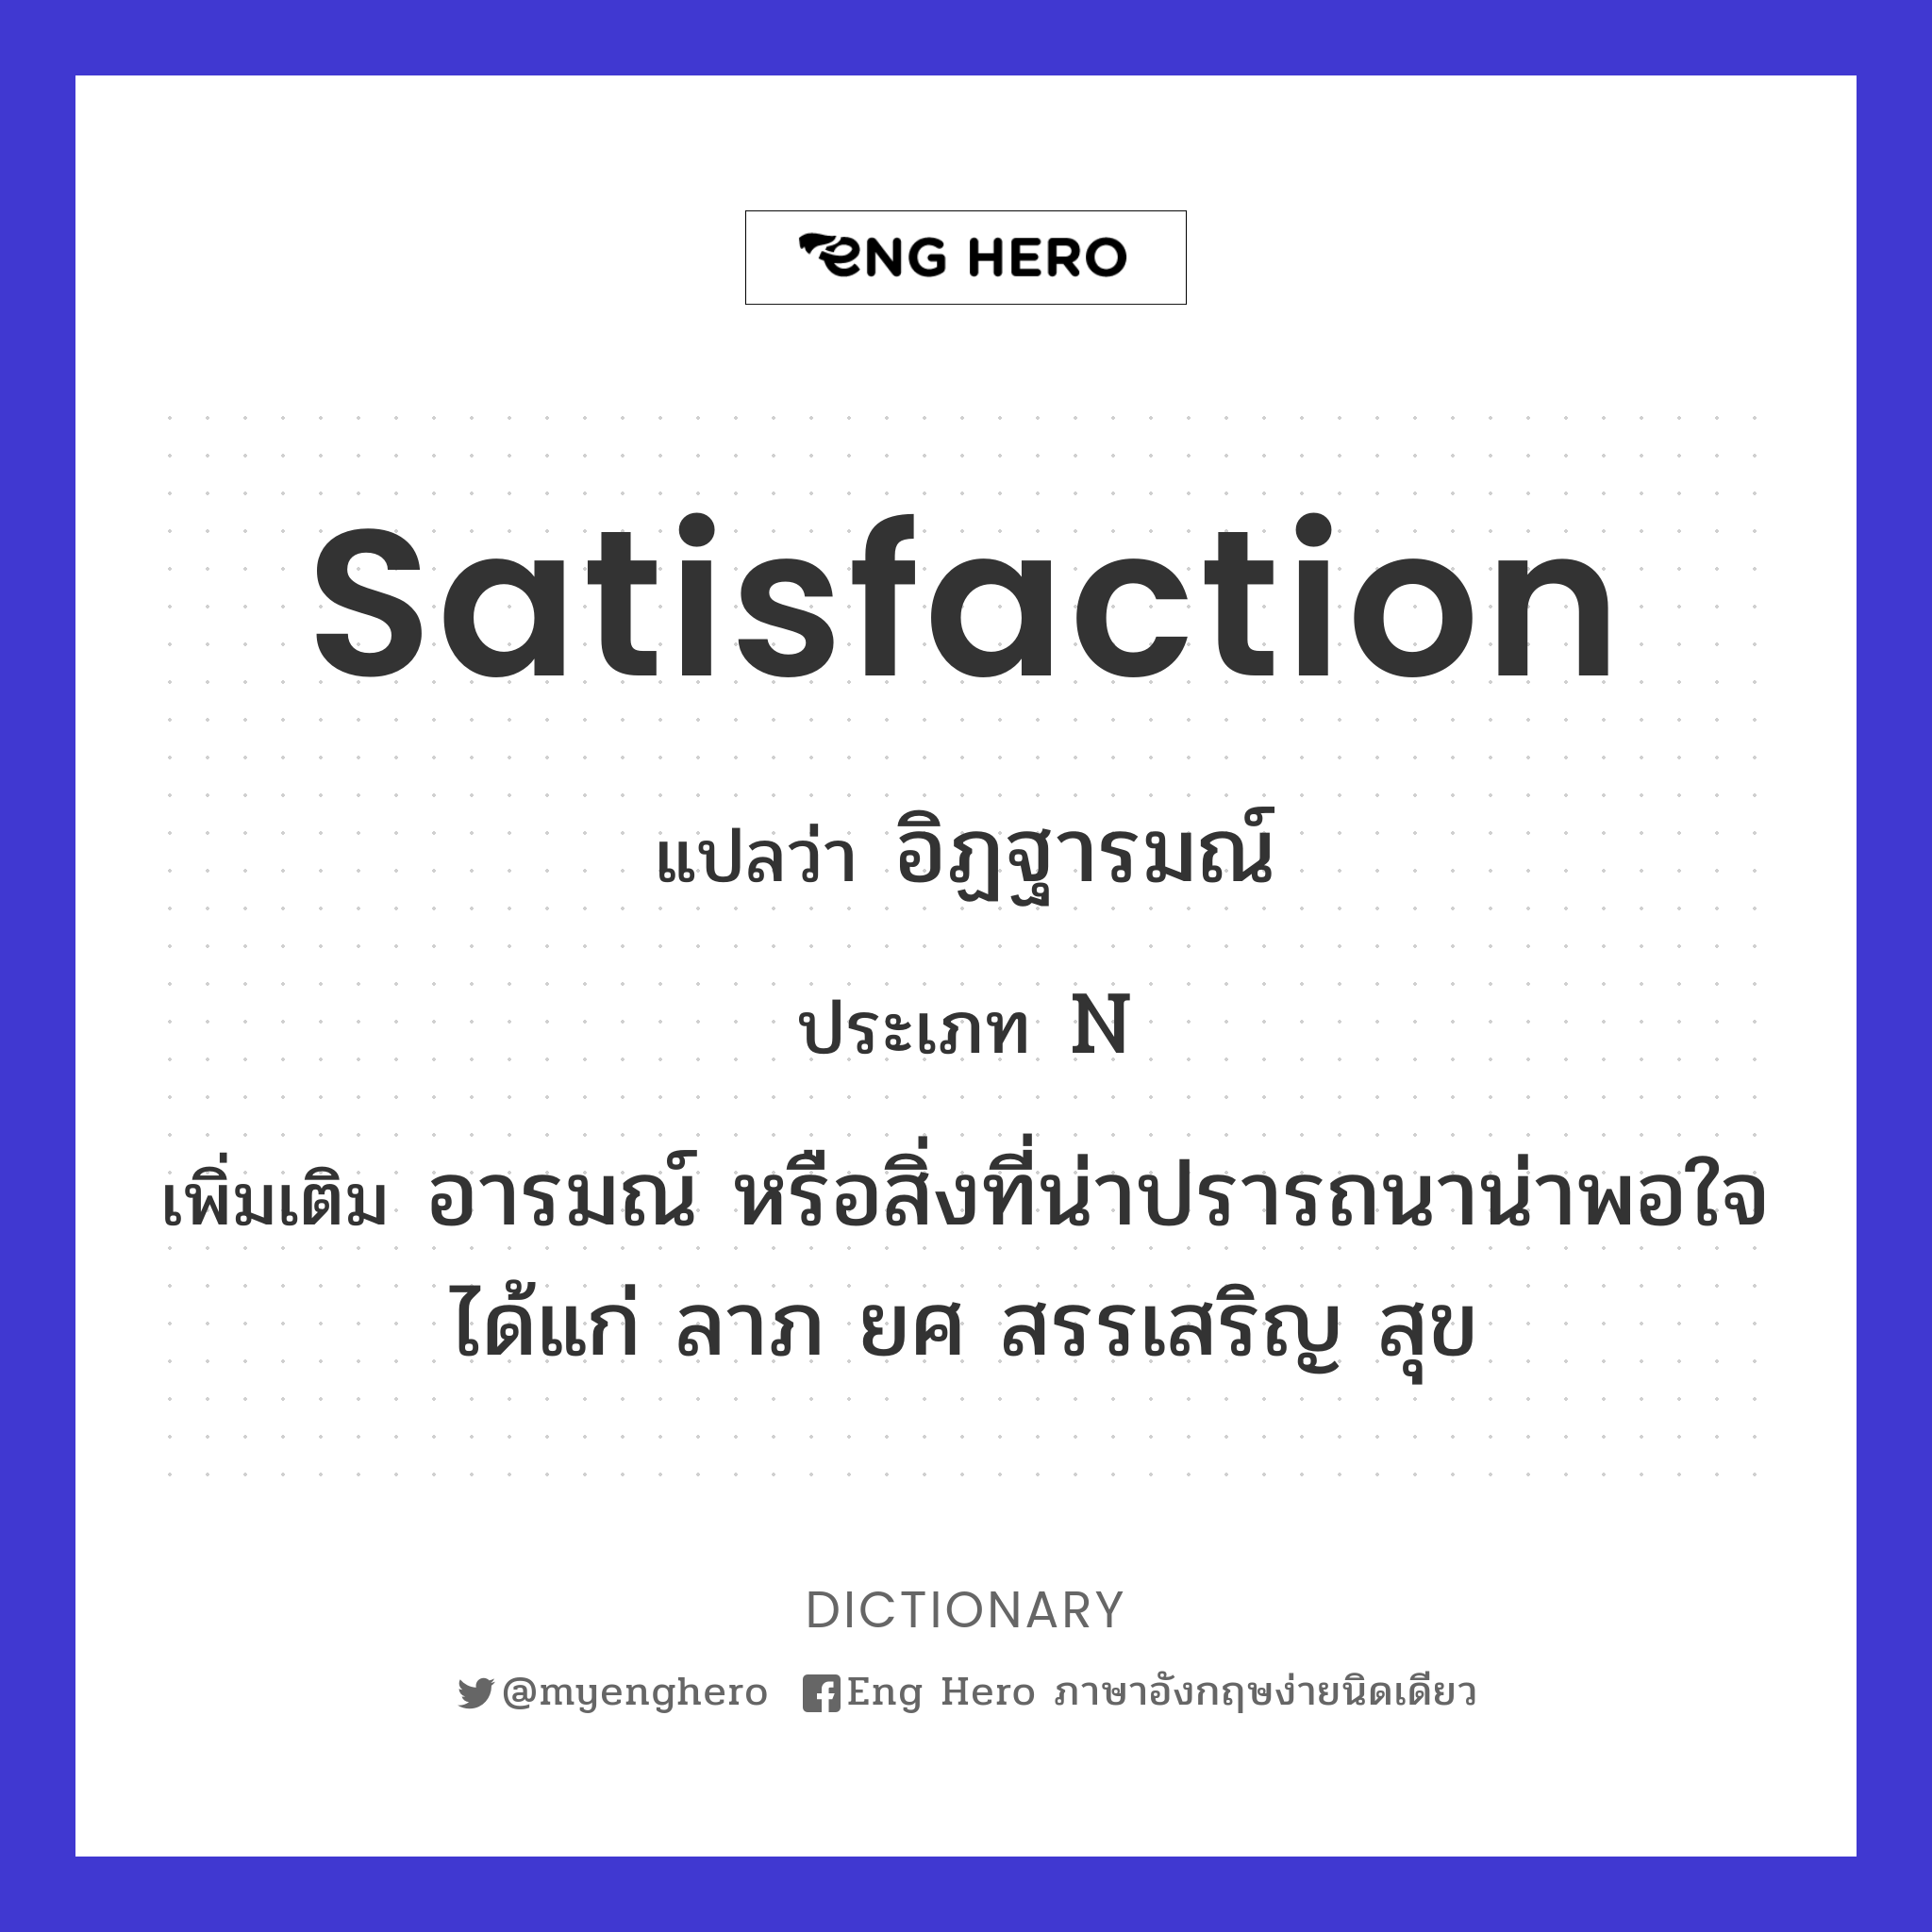 satisfaction